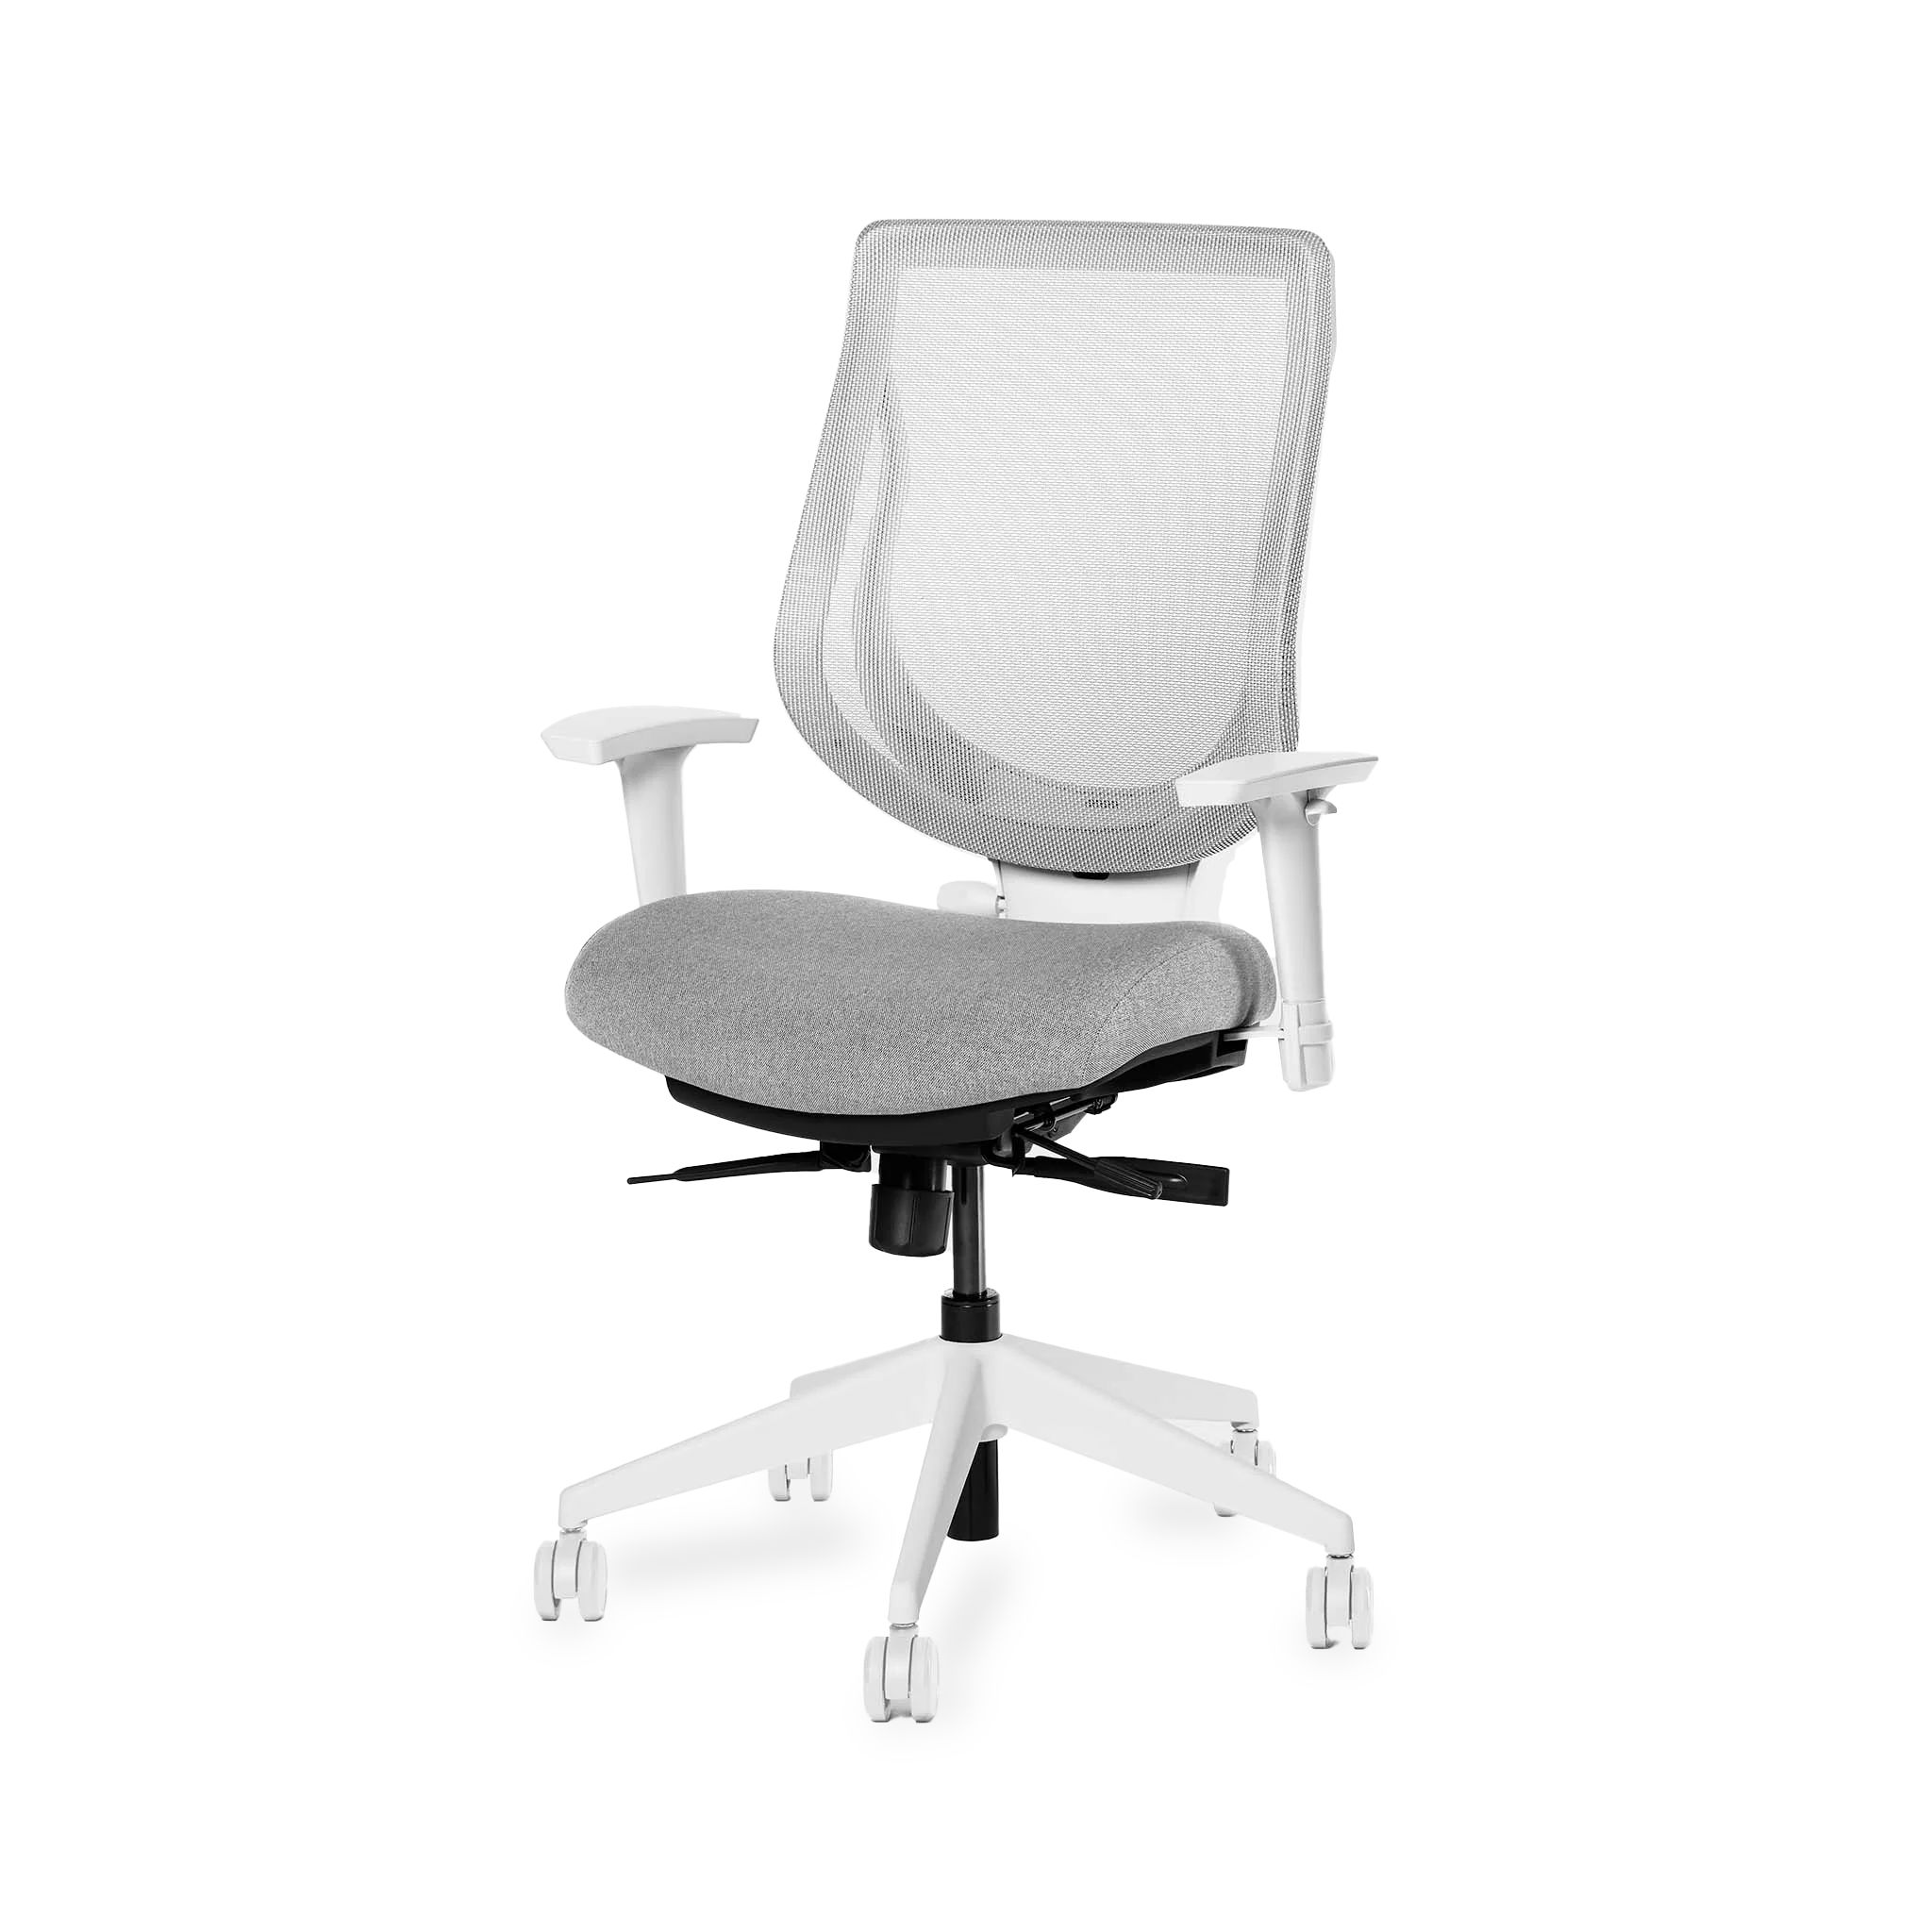 Buy the YouToo Ergonomic Office Chair | ergonofis | ergonofis